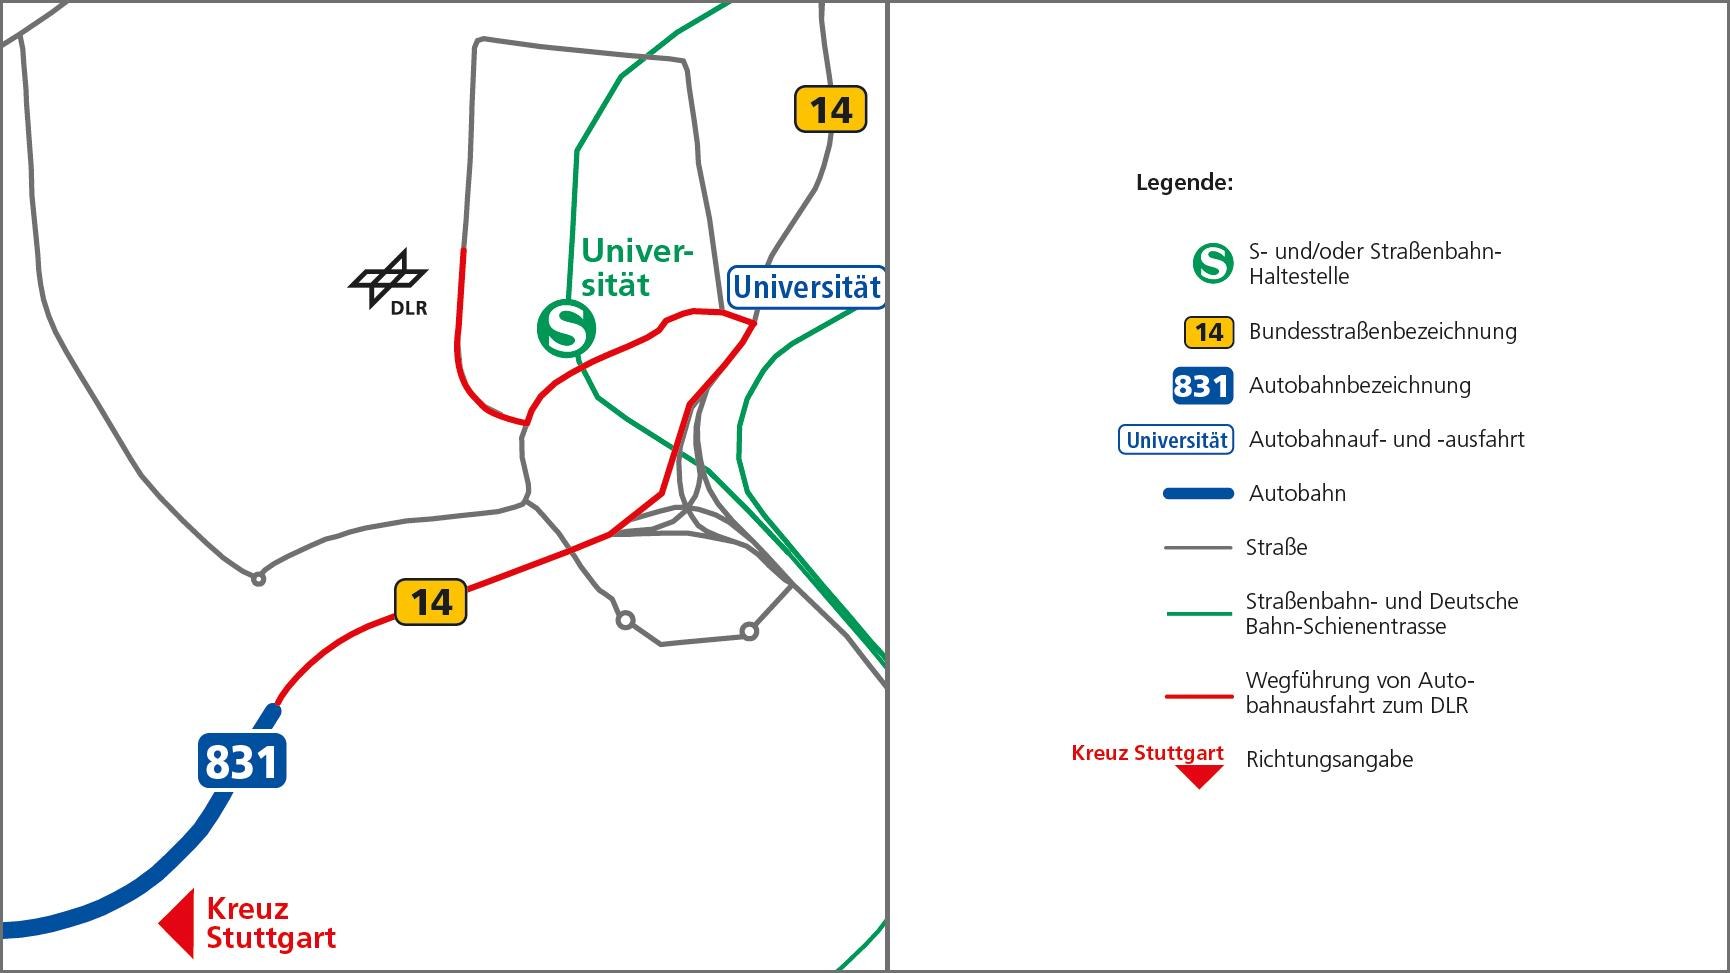 DLR site Stuttgart – How to find us